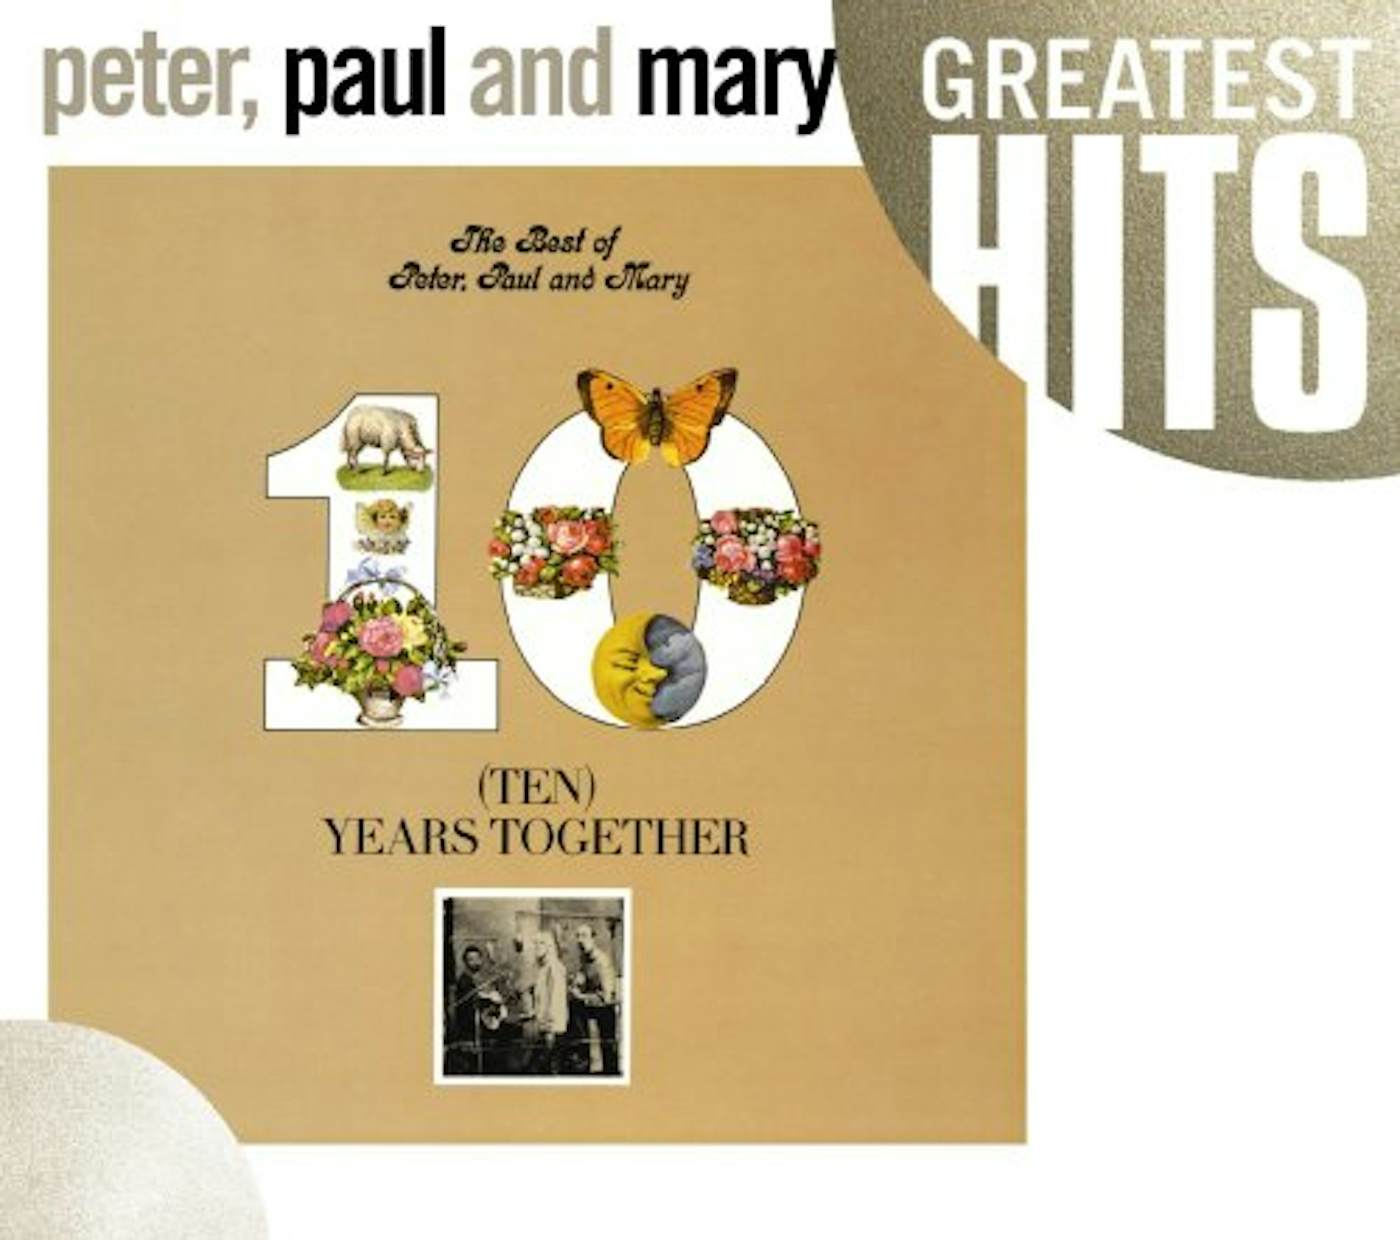 Peter, Paul and Mary - Hangman Lyrics